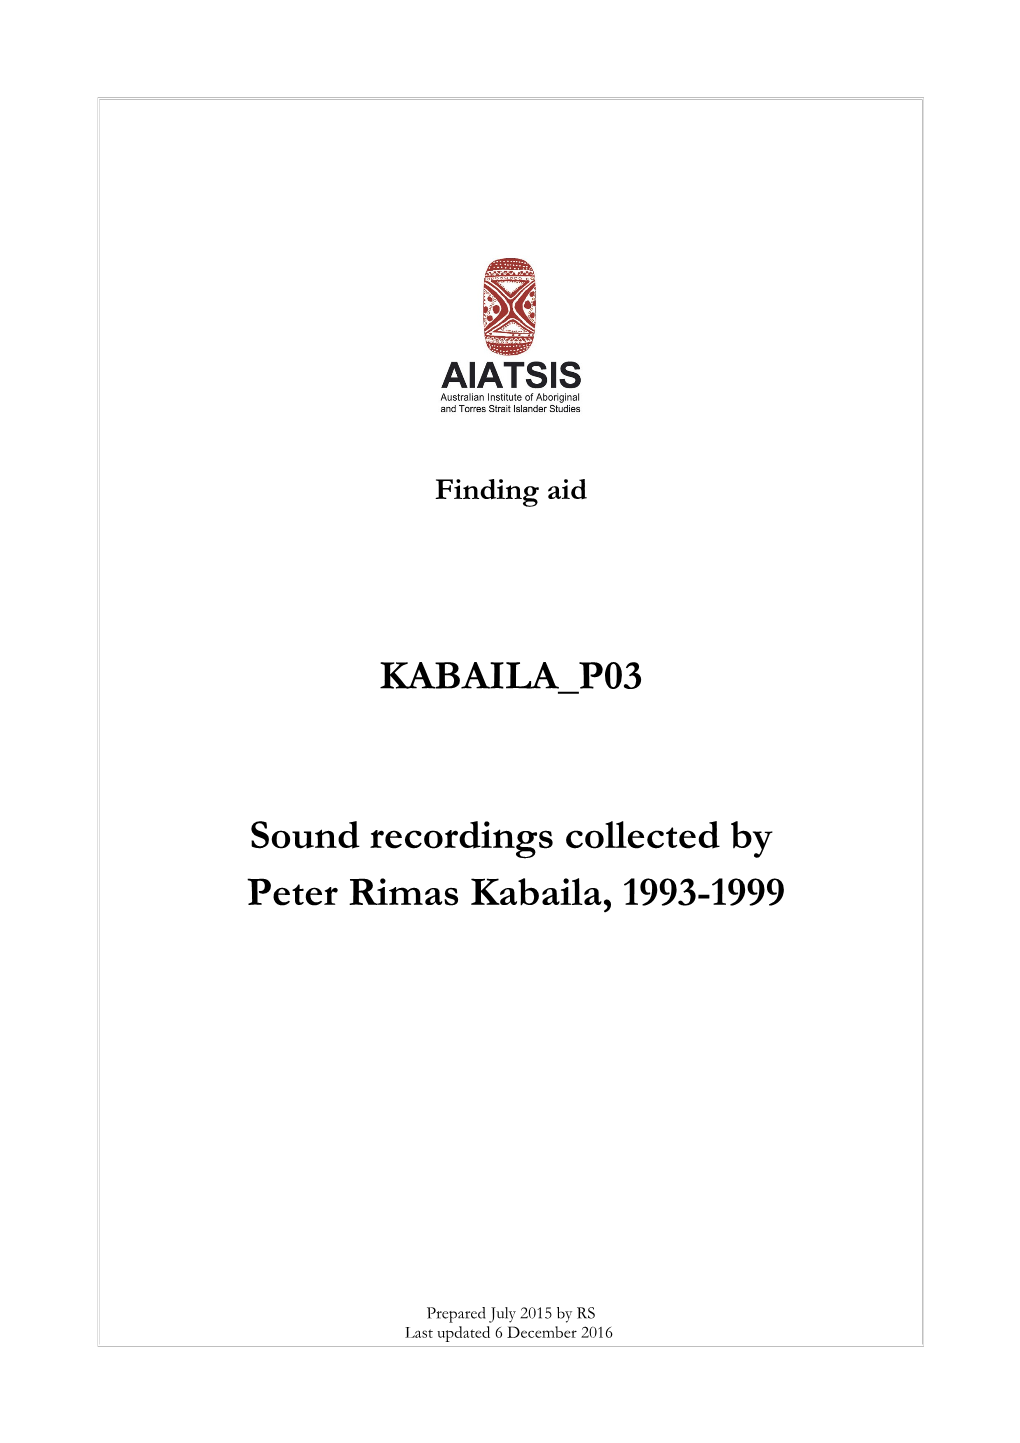 KABAILA P03 Sound Recordings Collected by Peter Rimas Kabaila